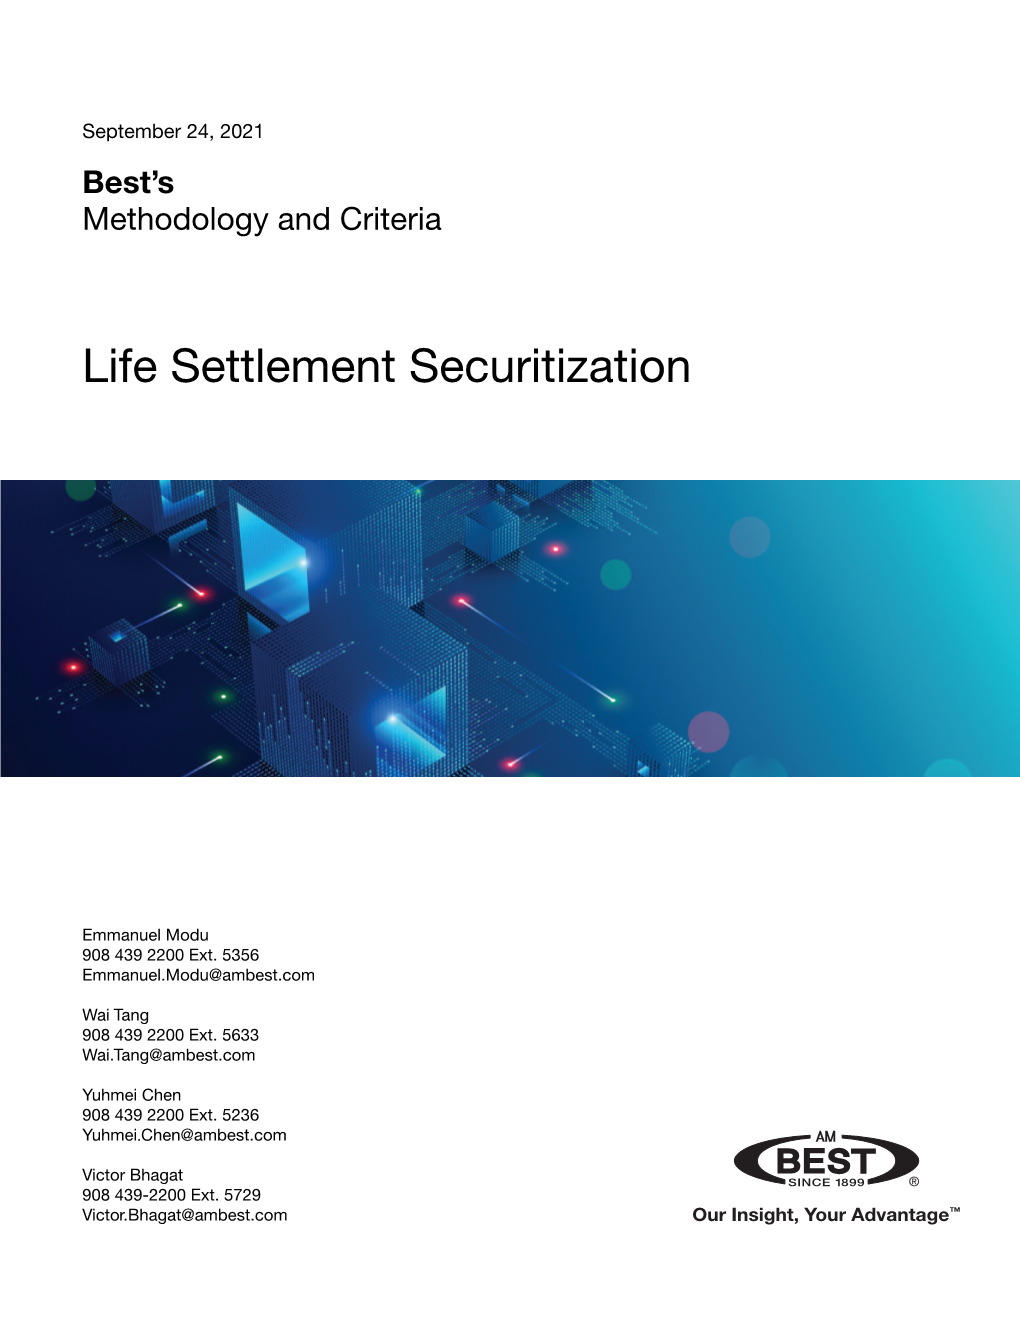 Life Settlement Securitization